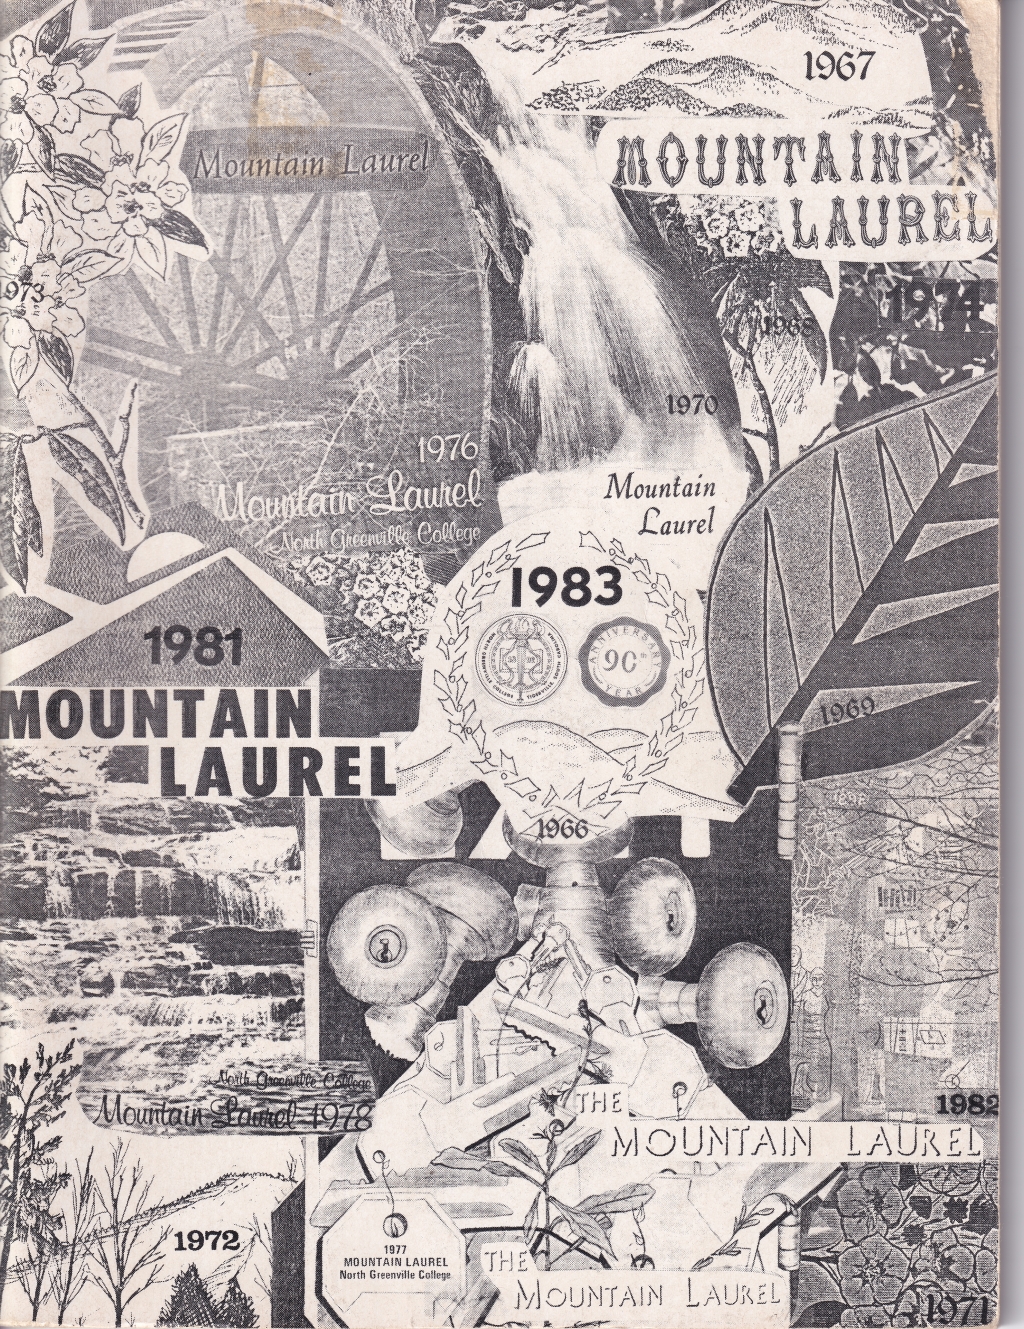 North Greenville’s Literary Magazine: The Mountain Laurel